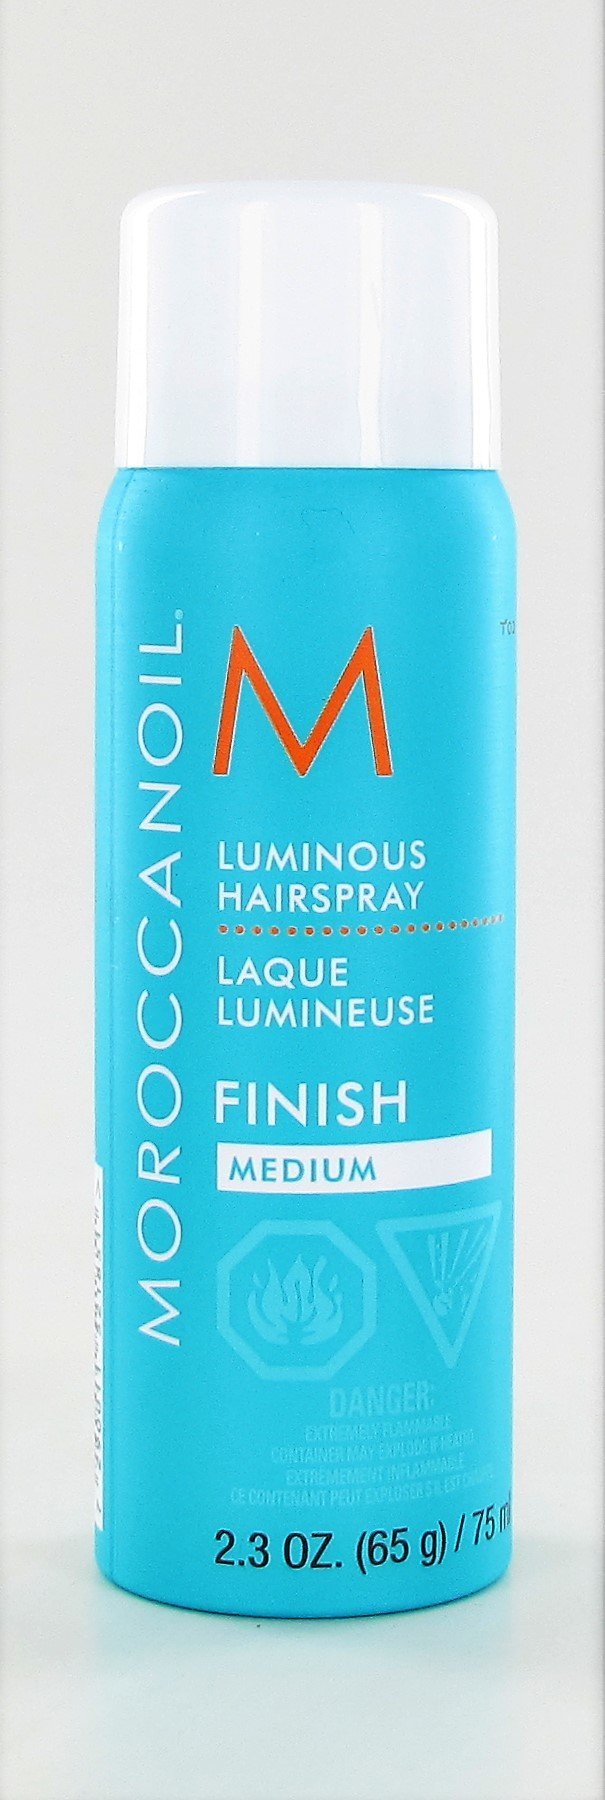 MoroccanOil Finish Medium Luminous Hairspray 2.3 oz